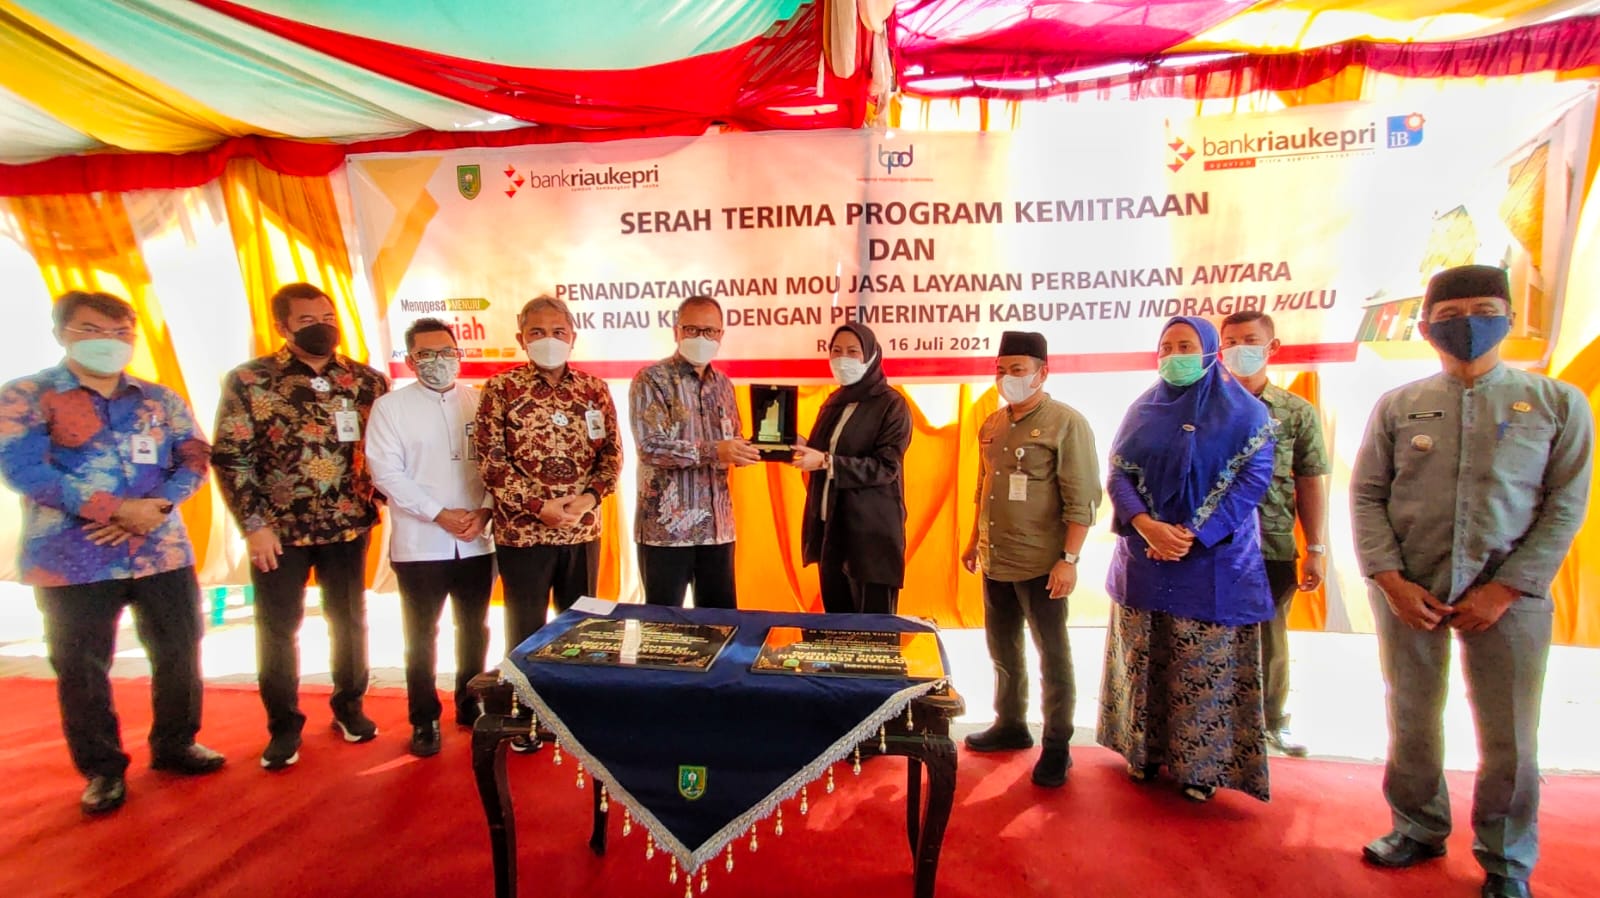 Serah Terima Program Bantuan Kemitraan Bank Riau Kepri, Bupati Rezita Ucapkan Terimakasih